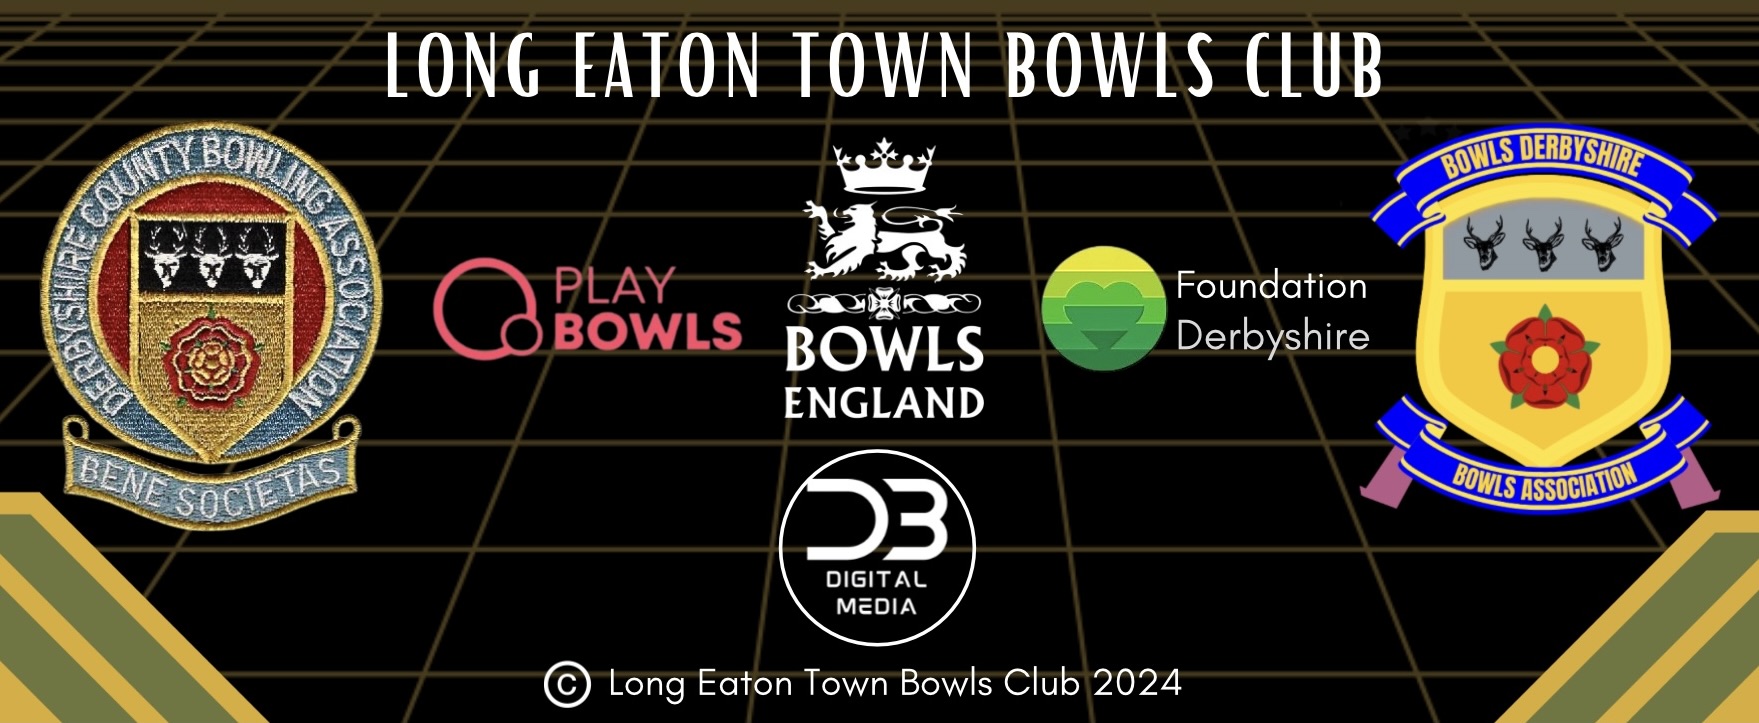 Long Eaton Town Bowls Club Links